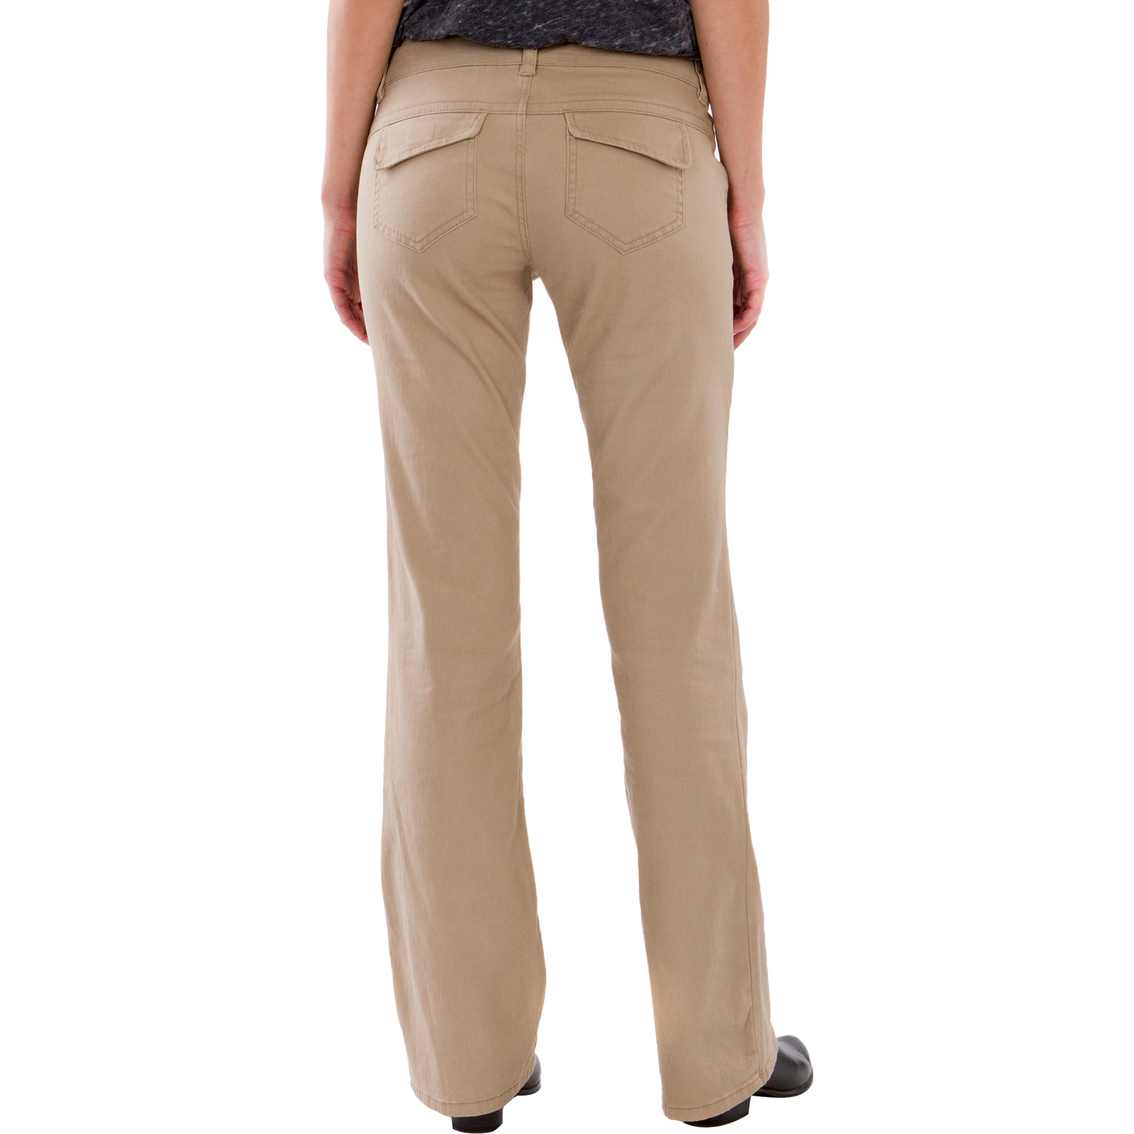 Unionbay Juniors Heather Uniform Pants - Image 2 of 2